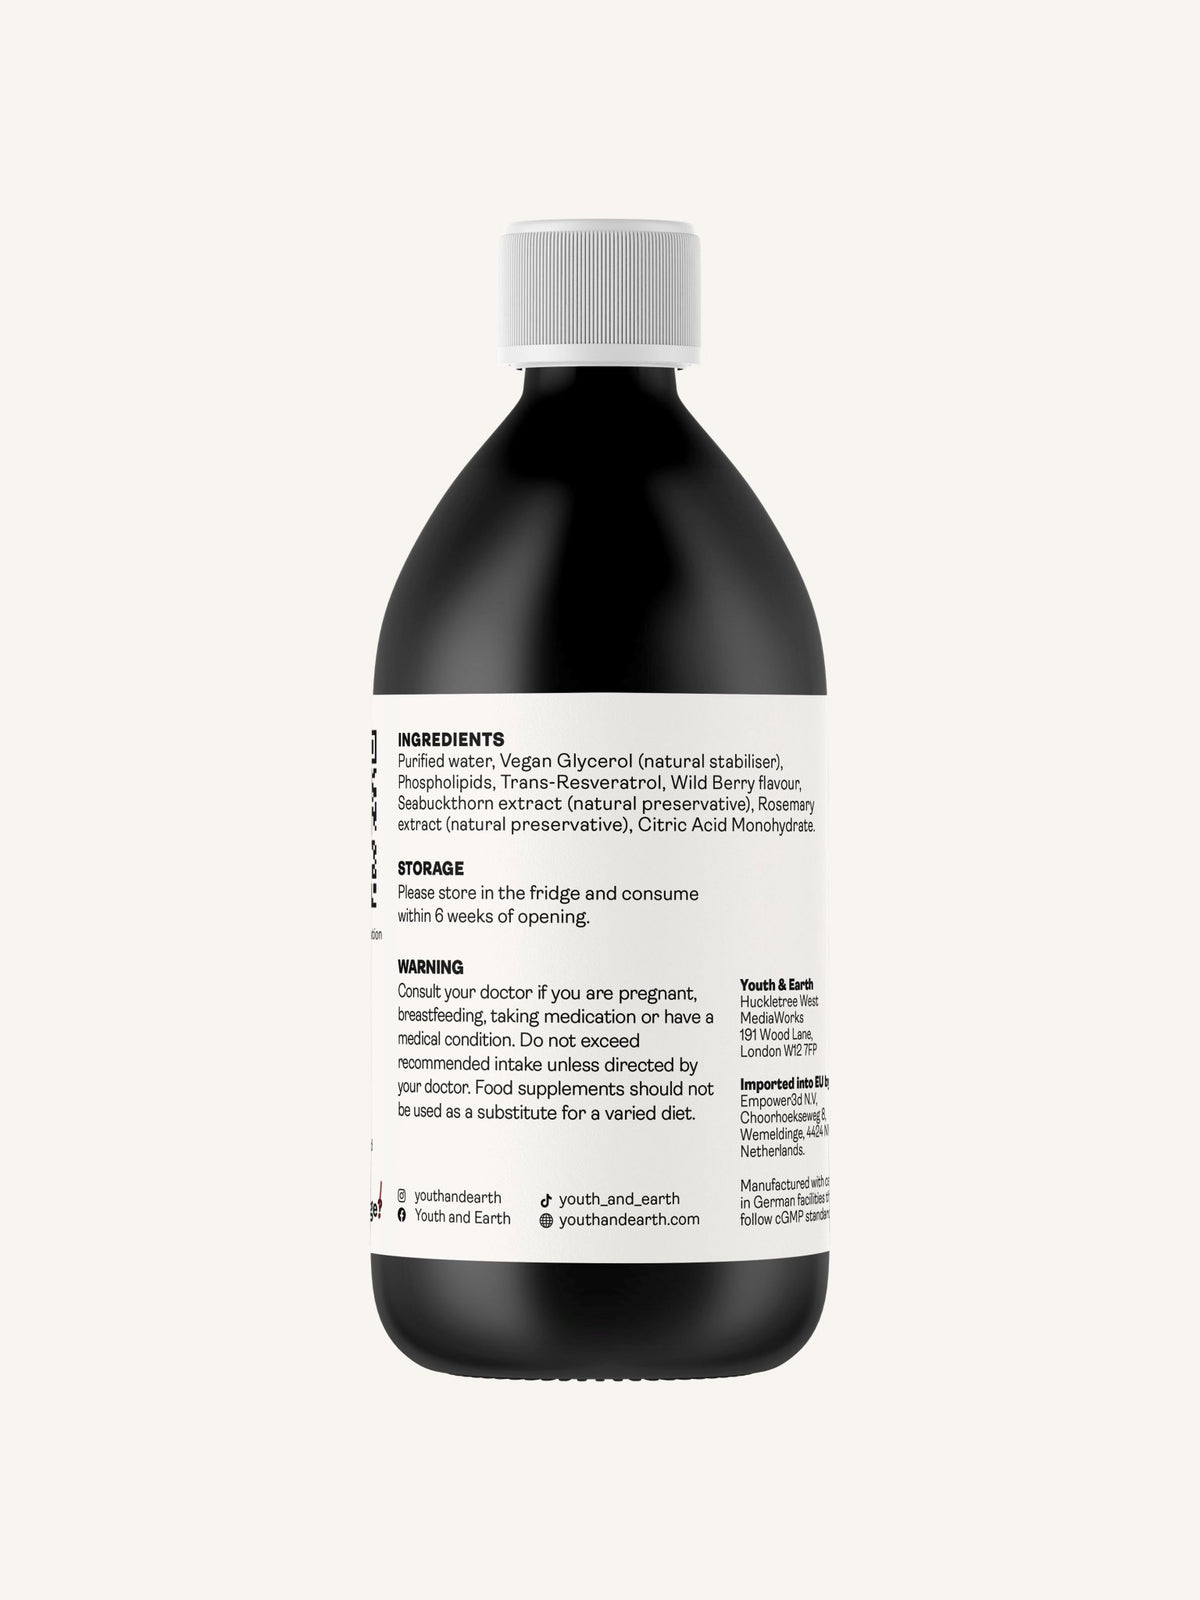 Liposomal Resveratrol 200mg – Wild Berry Flavour 250ml - Youth &amp; Earth EU Store